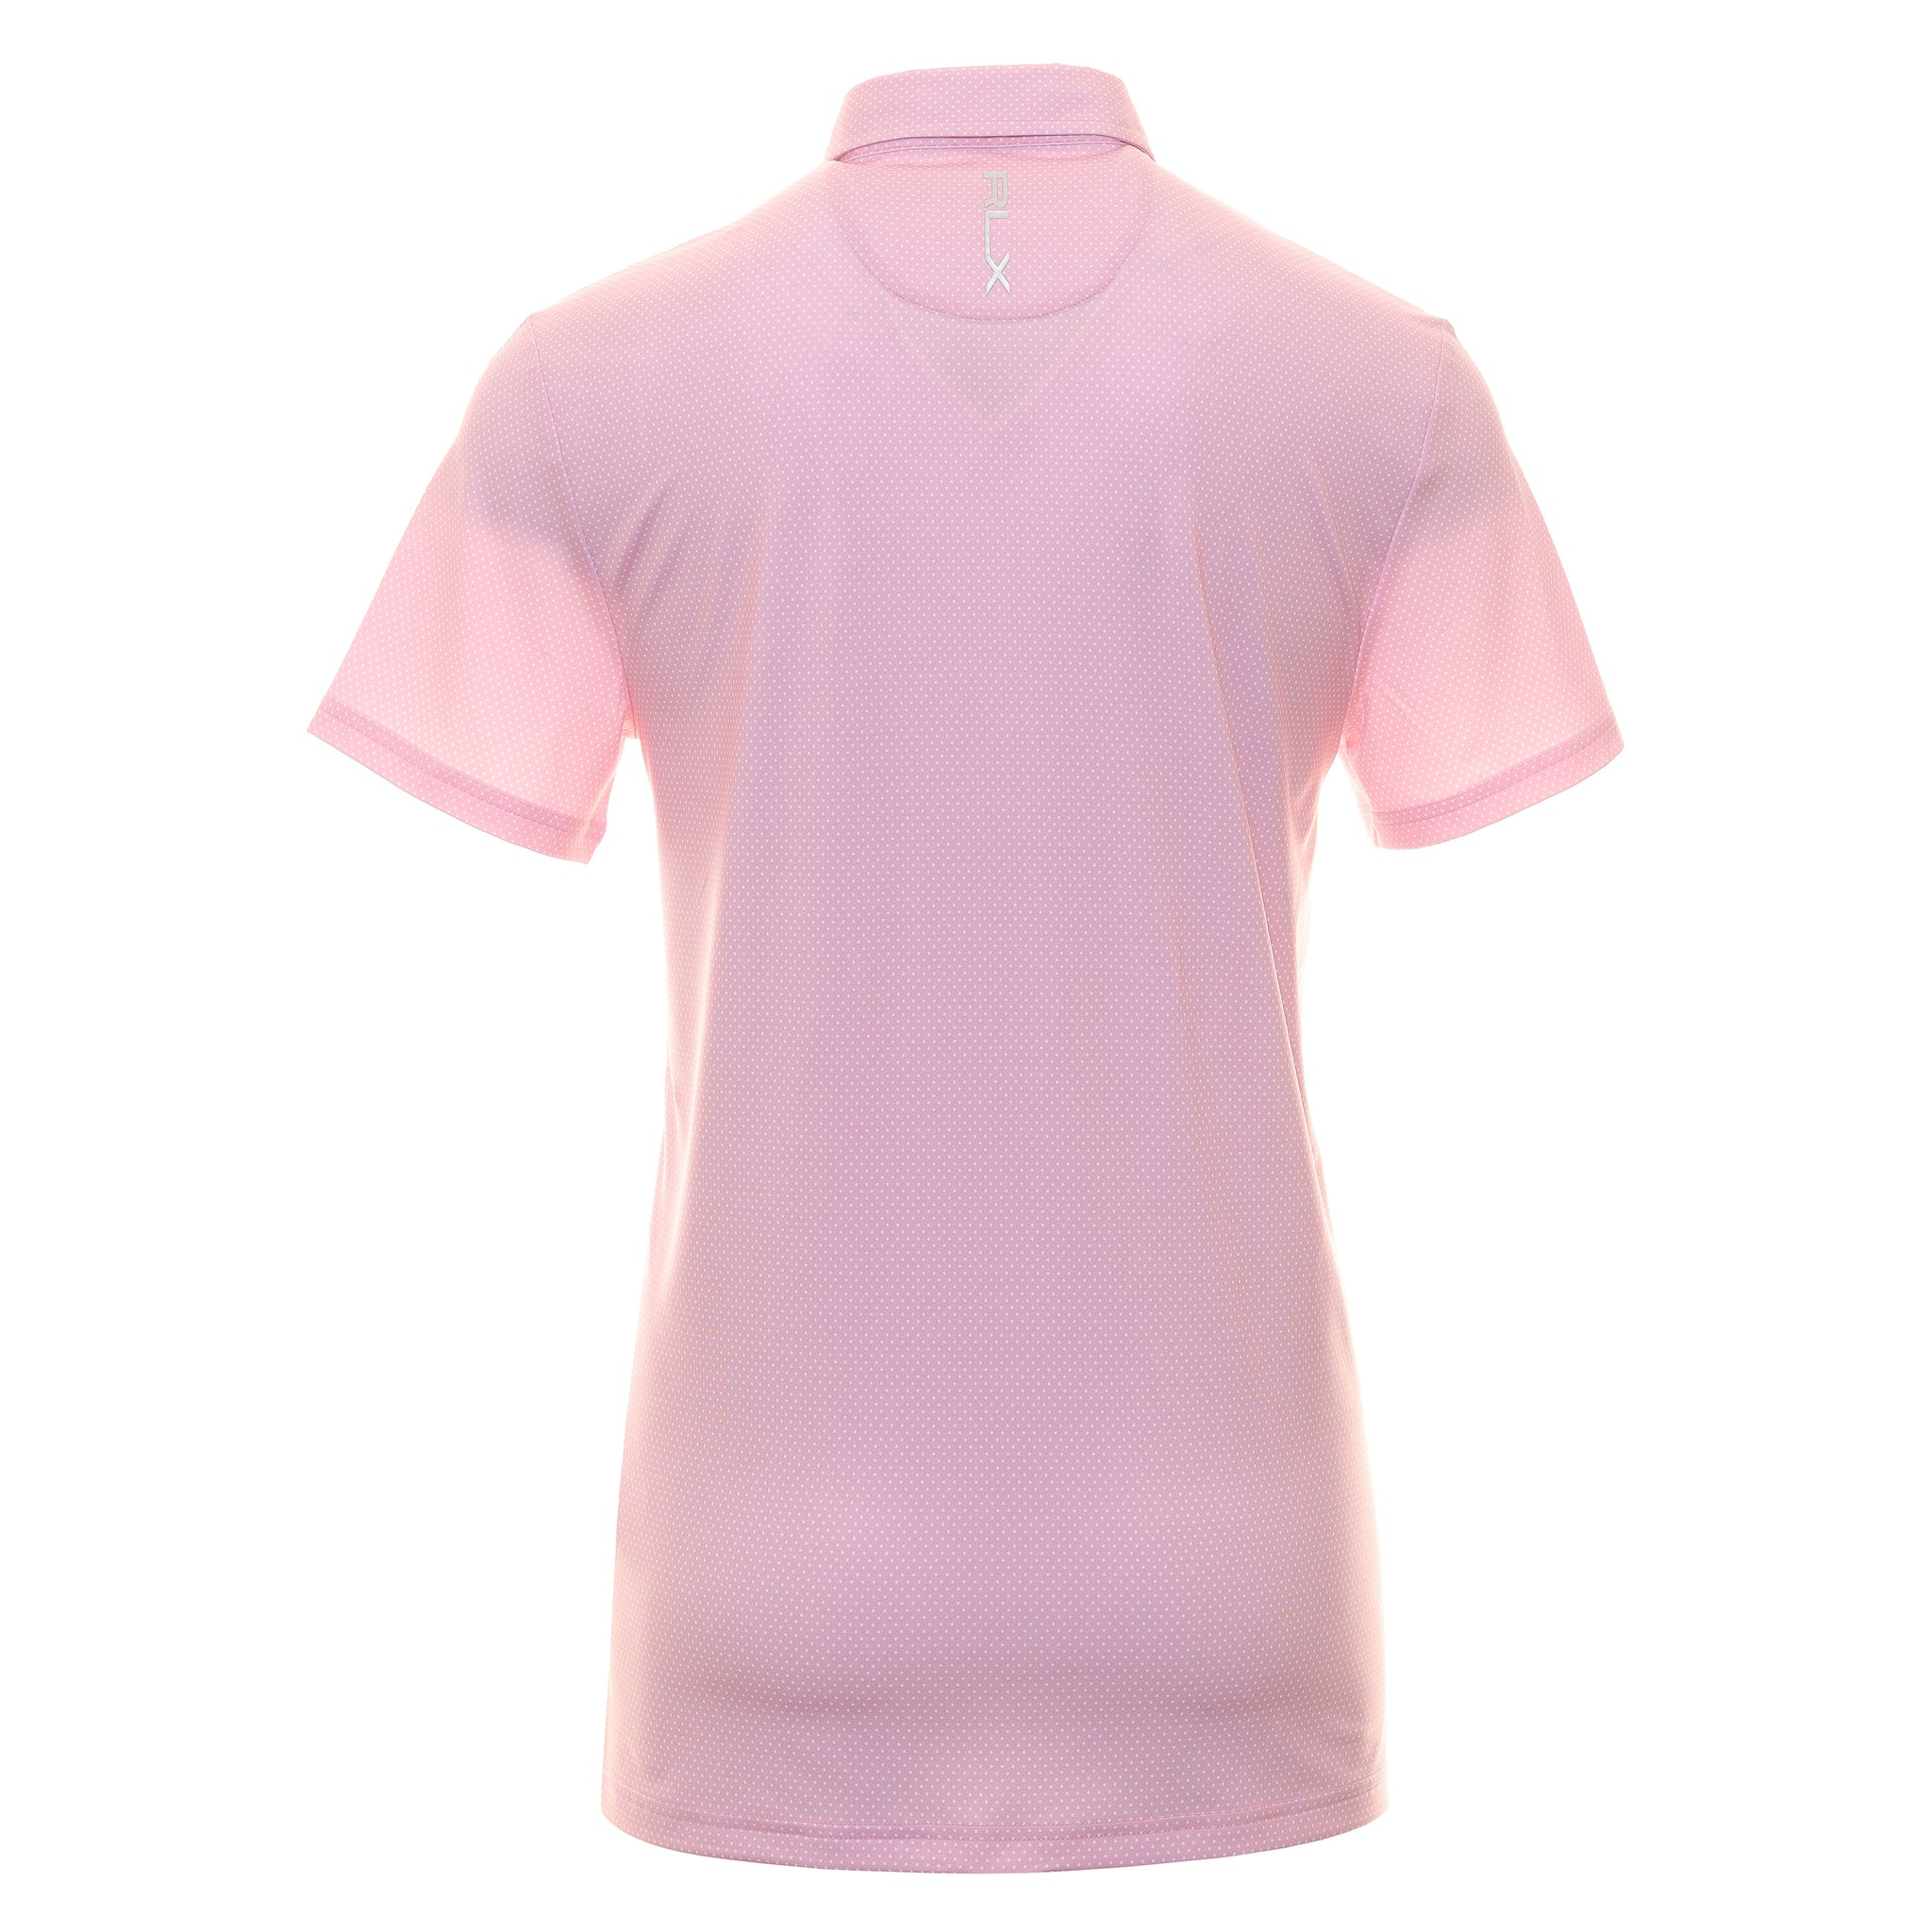 rlx-ralph-lauren-graphic-print-polo-shirt-785918204-pink-flamingo-pin-dot-002